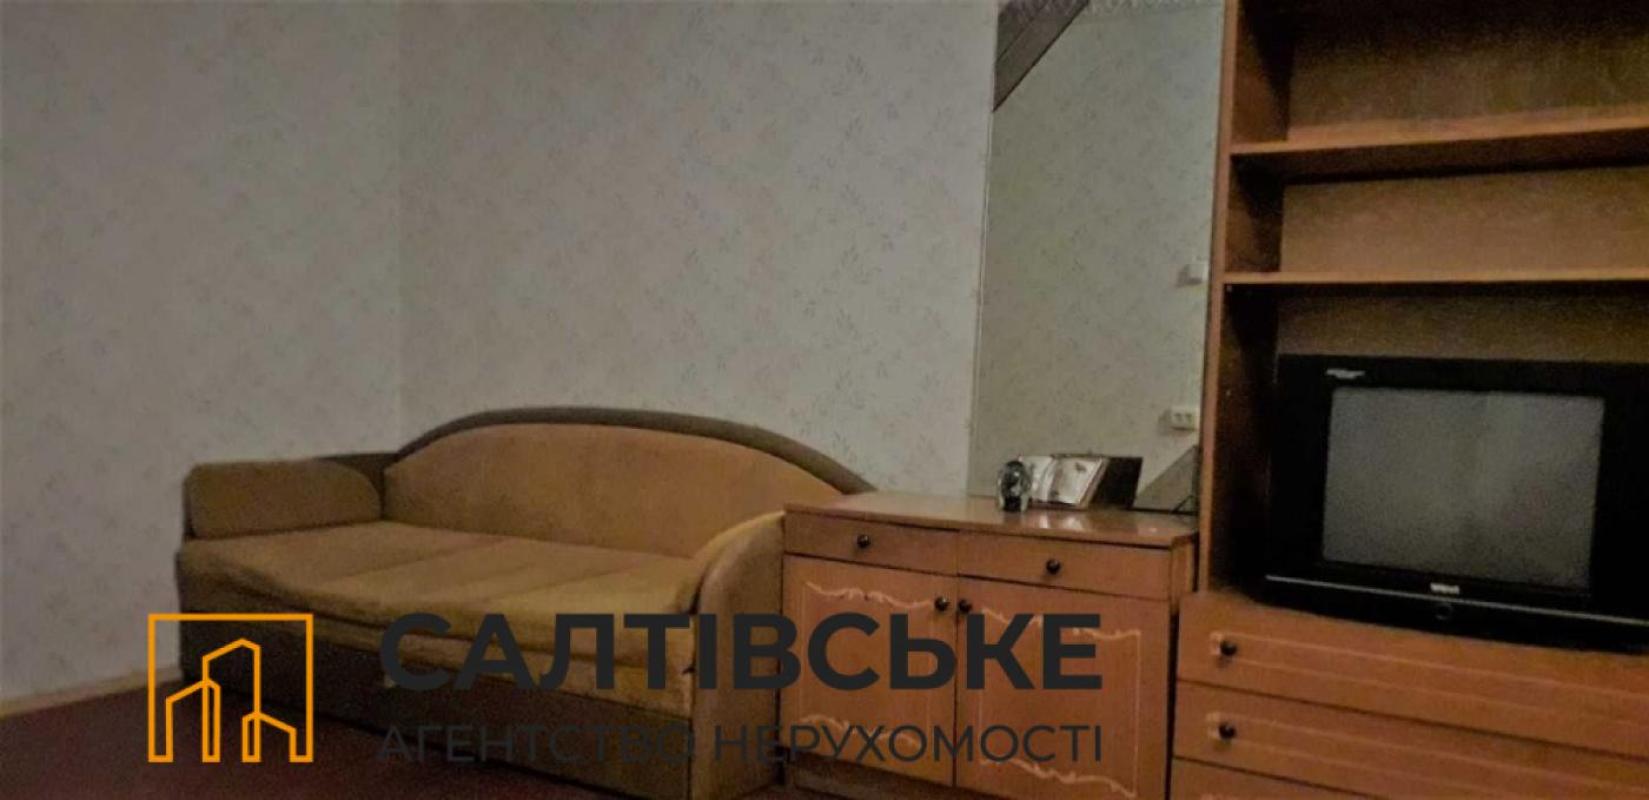 Sale 1 bedroom-(s) apartment 35 sq. m., Dzherelna Street 13